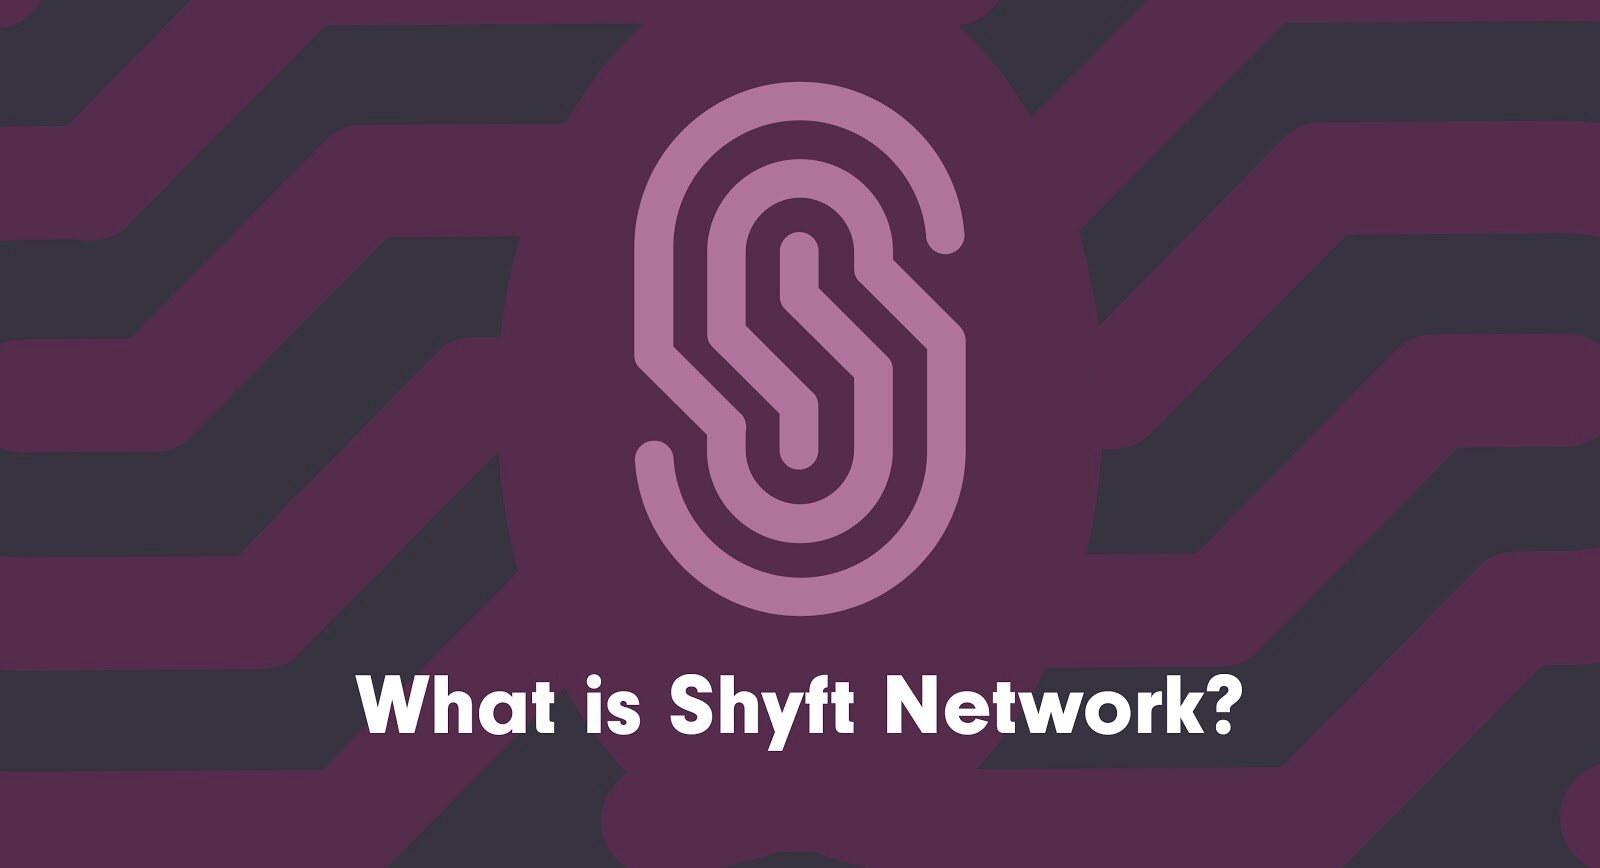 Shyft Network 란?